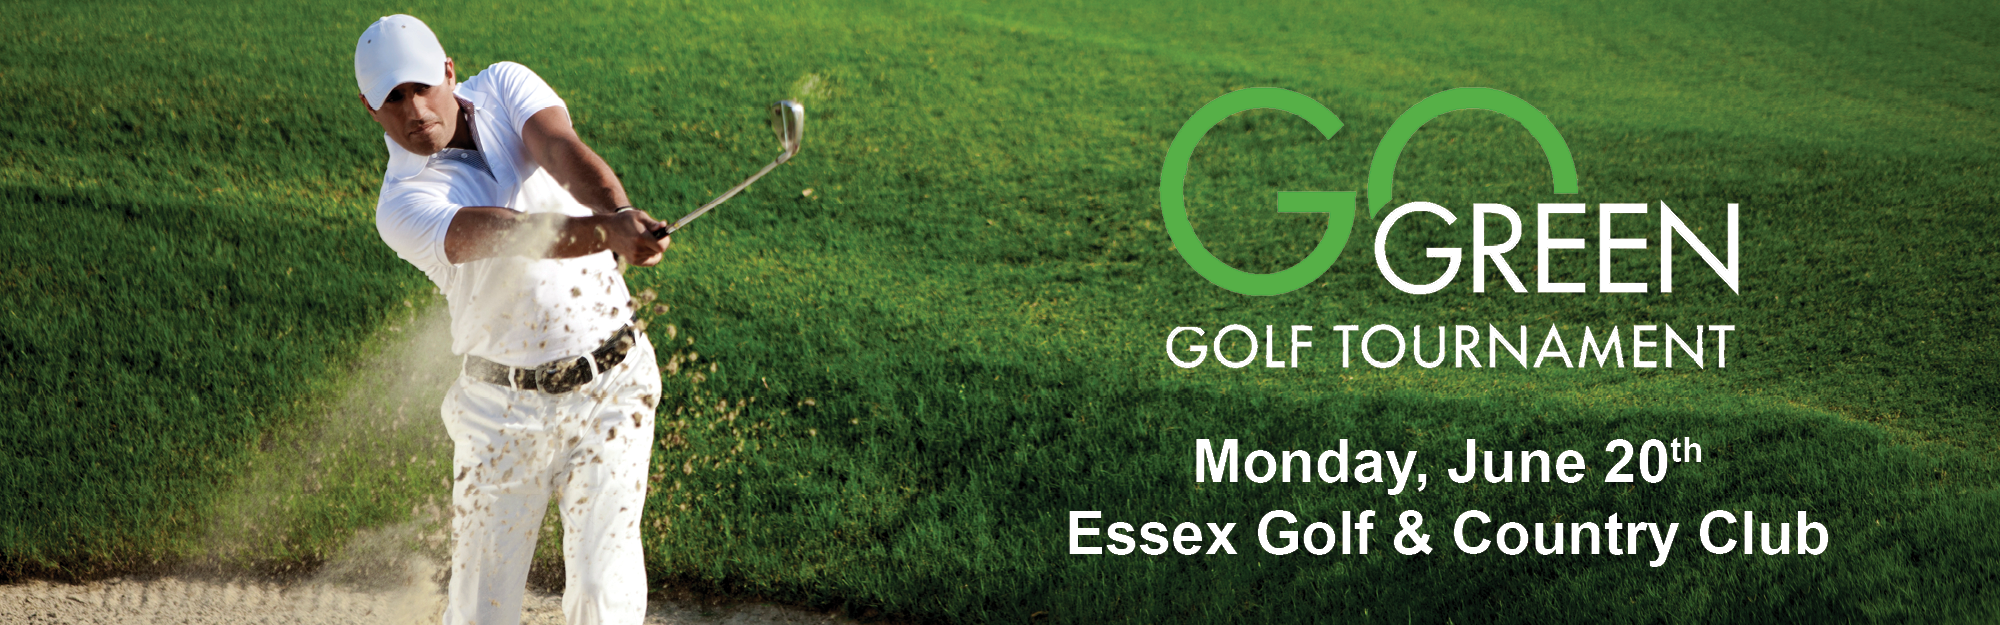 Go Green Golf Tournament